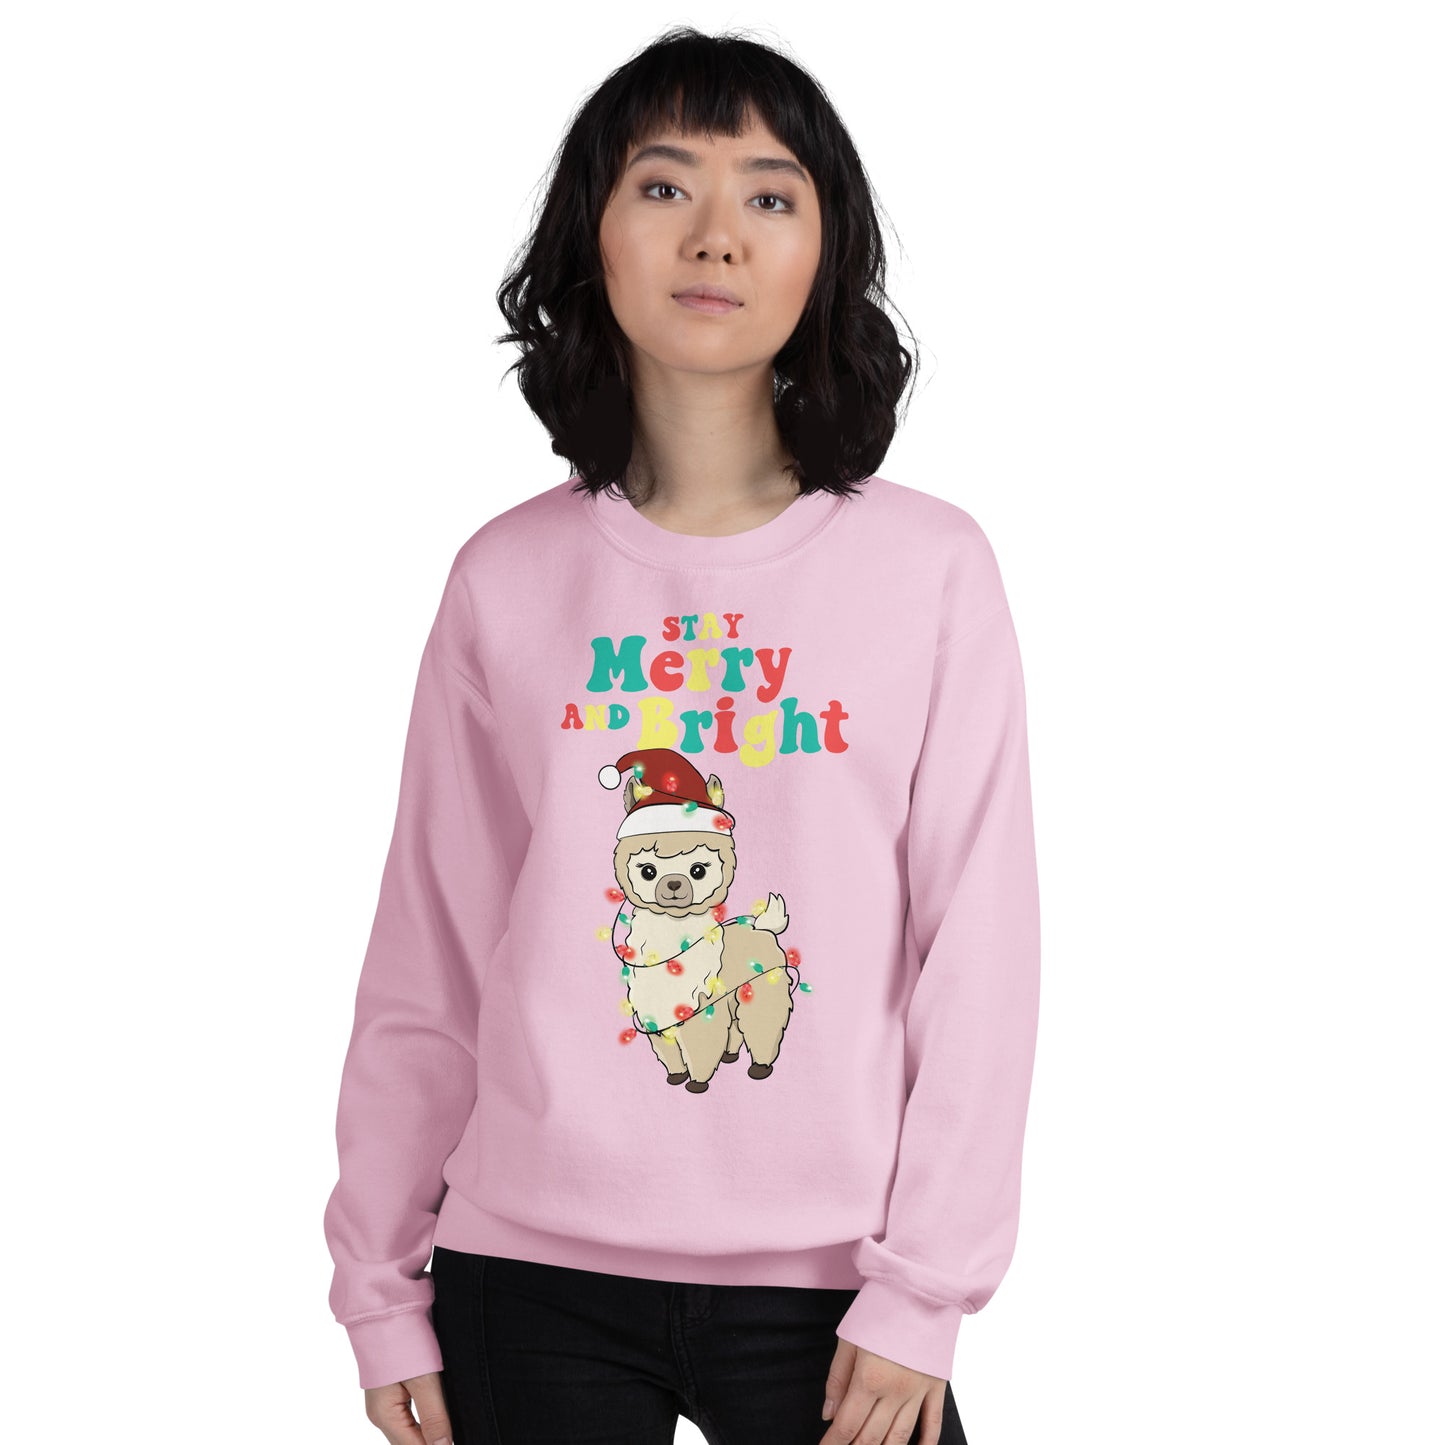 Stay Merry And Bright - Llama Meets Christmas Lights Sweatshirt